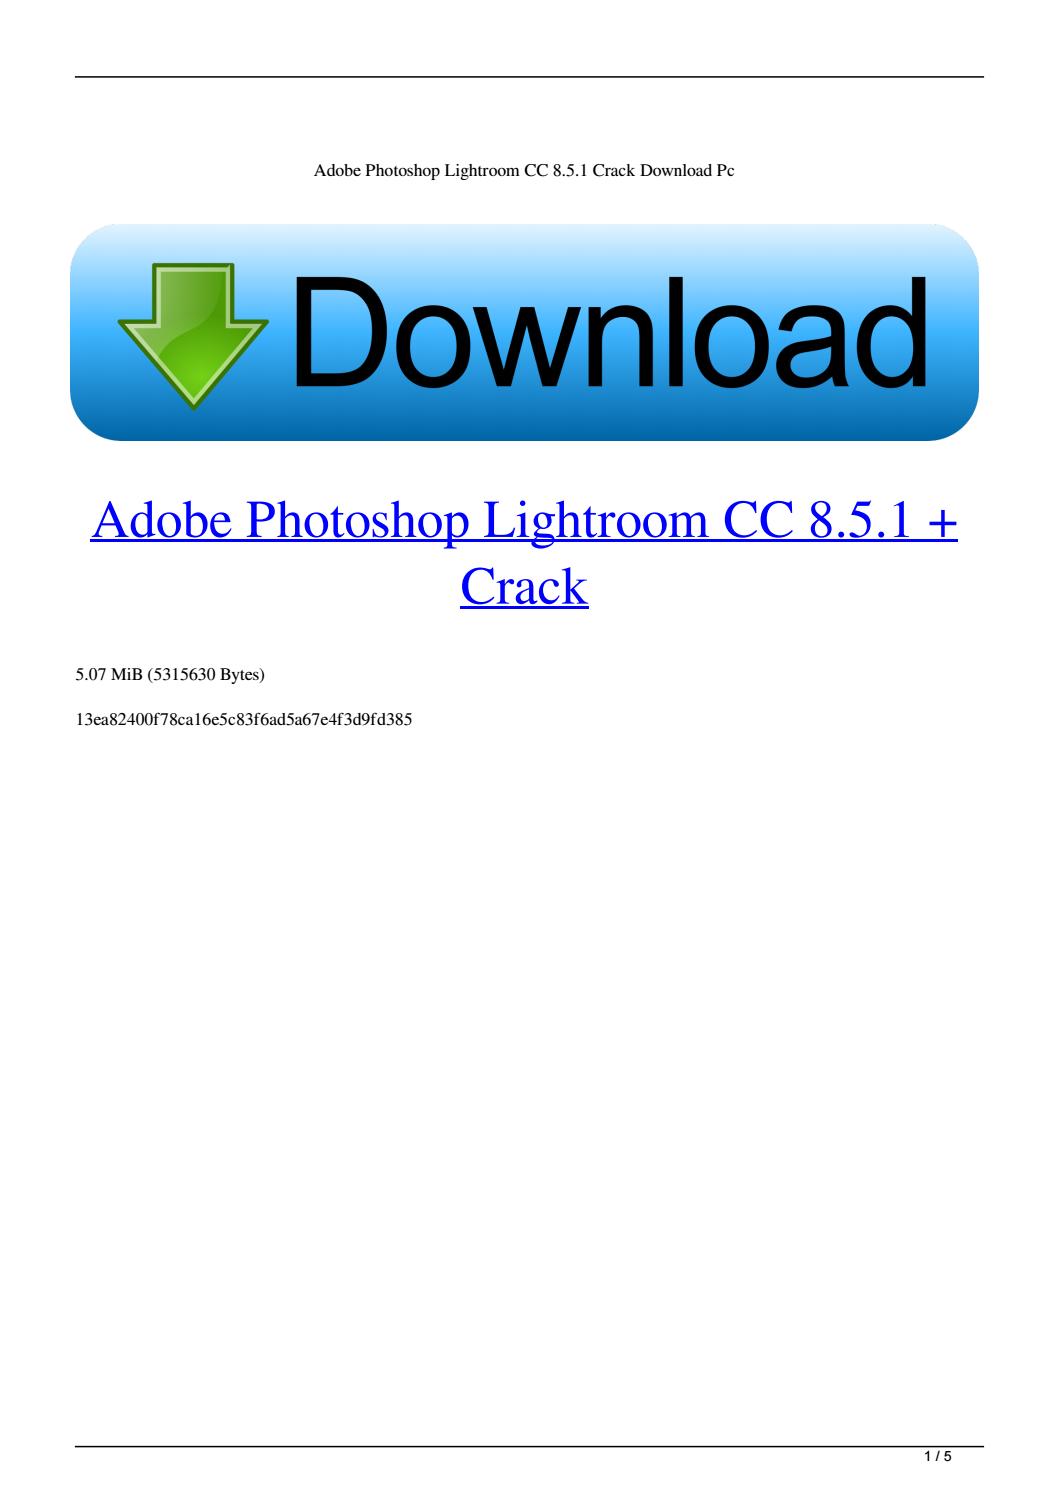 adobe photoshop crack download for windows 10